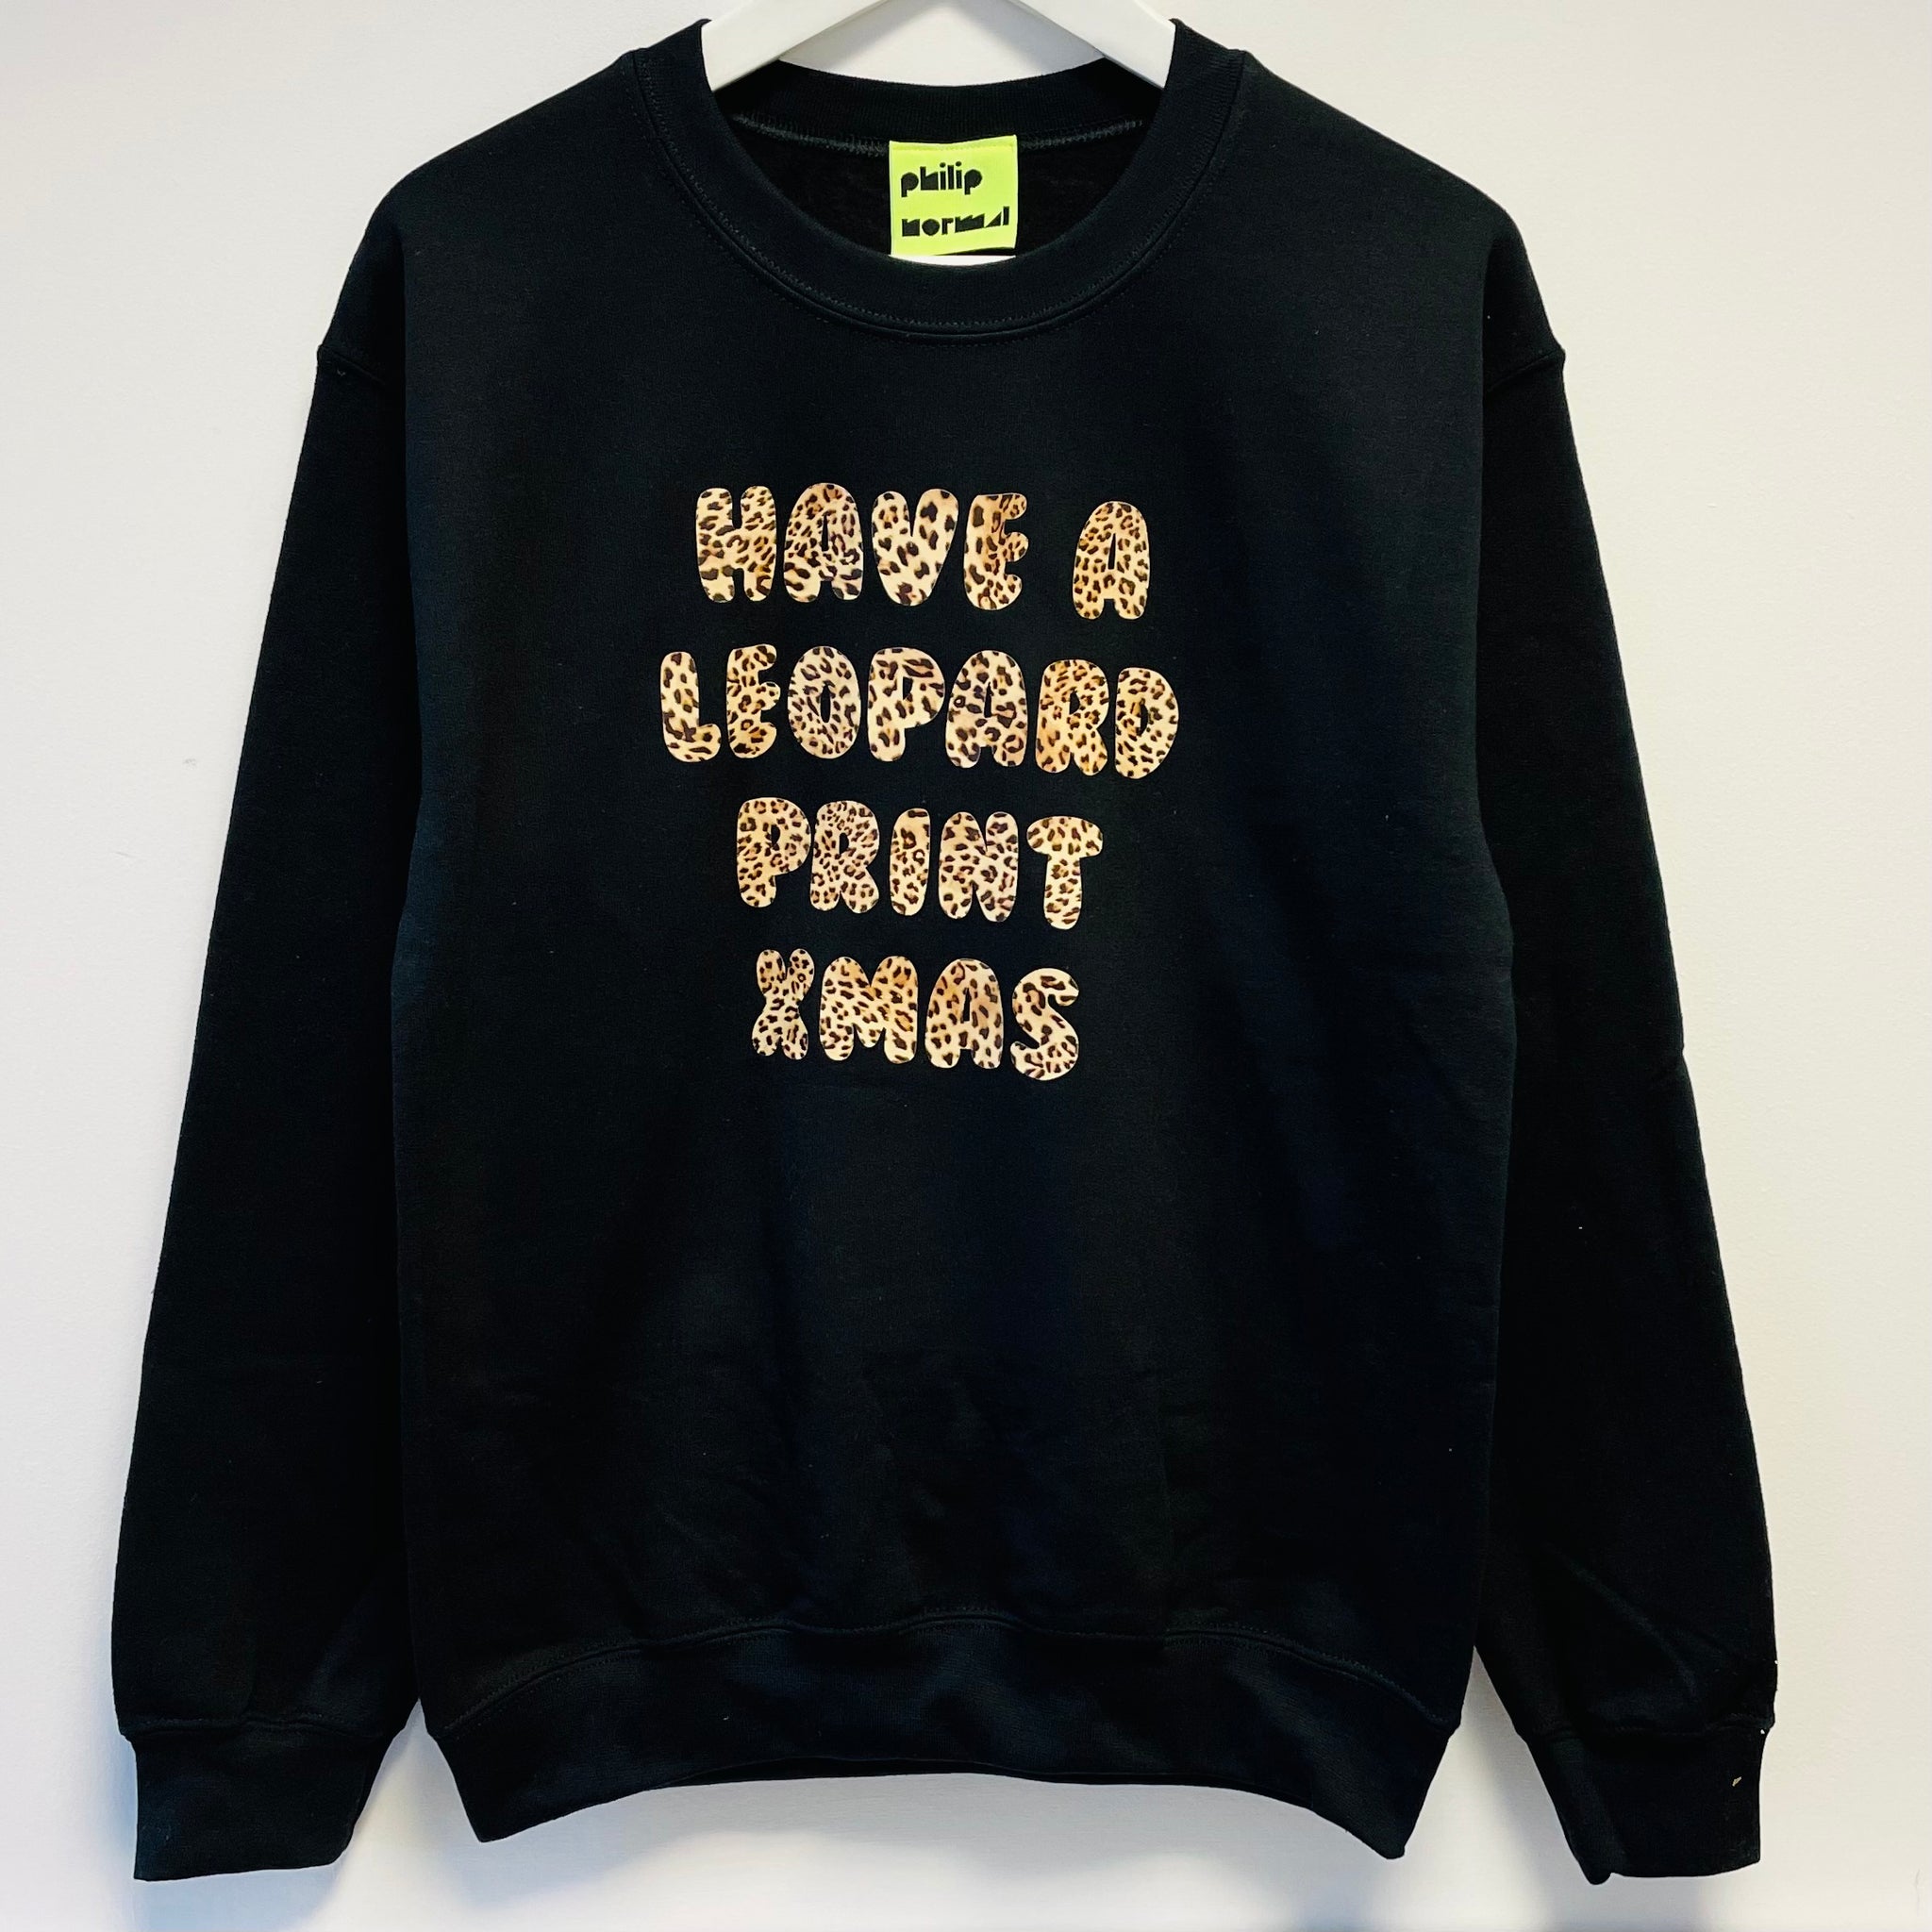 Have A Leopard Print Xmas Sweatshirt